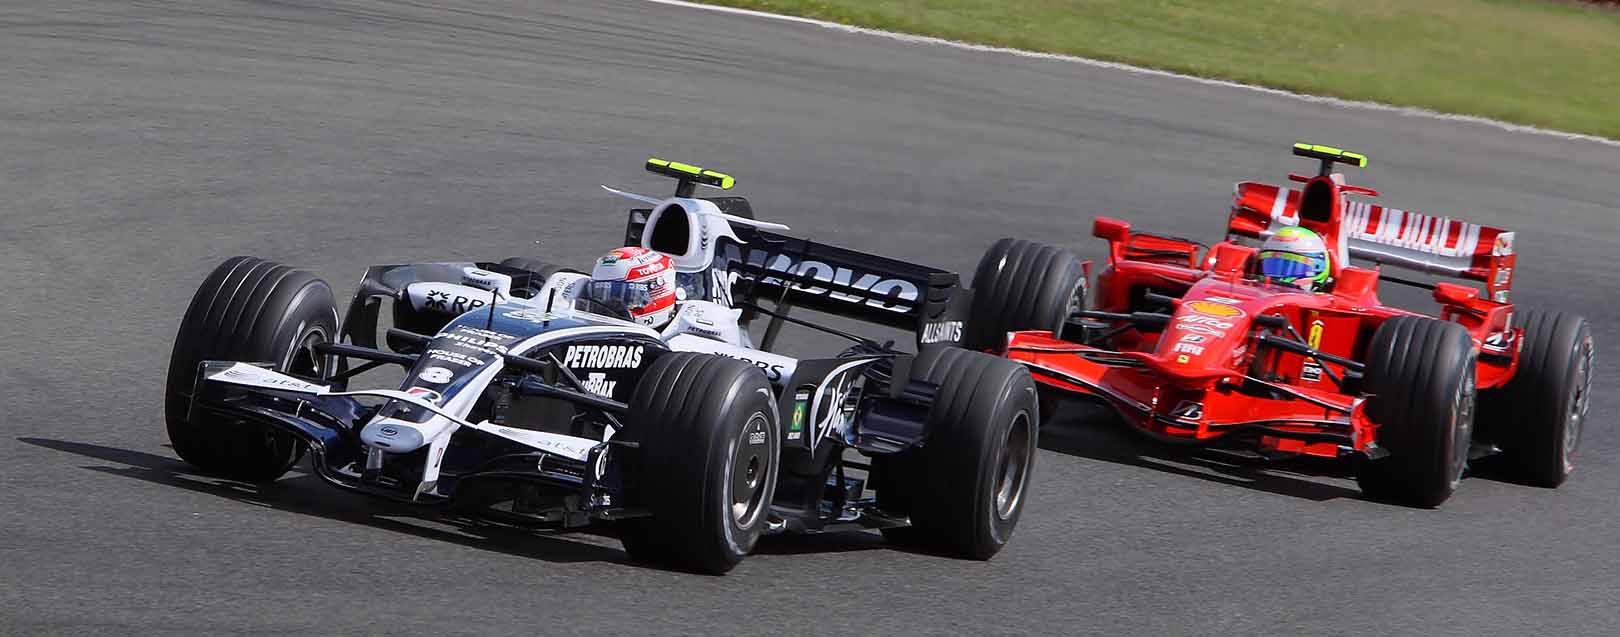 British Grand Prix, JLR in talks to lease track 